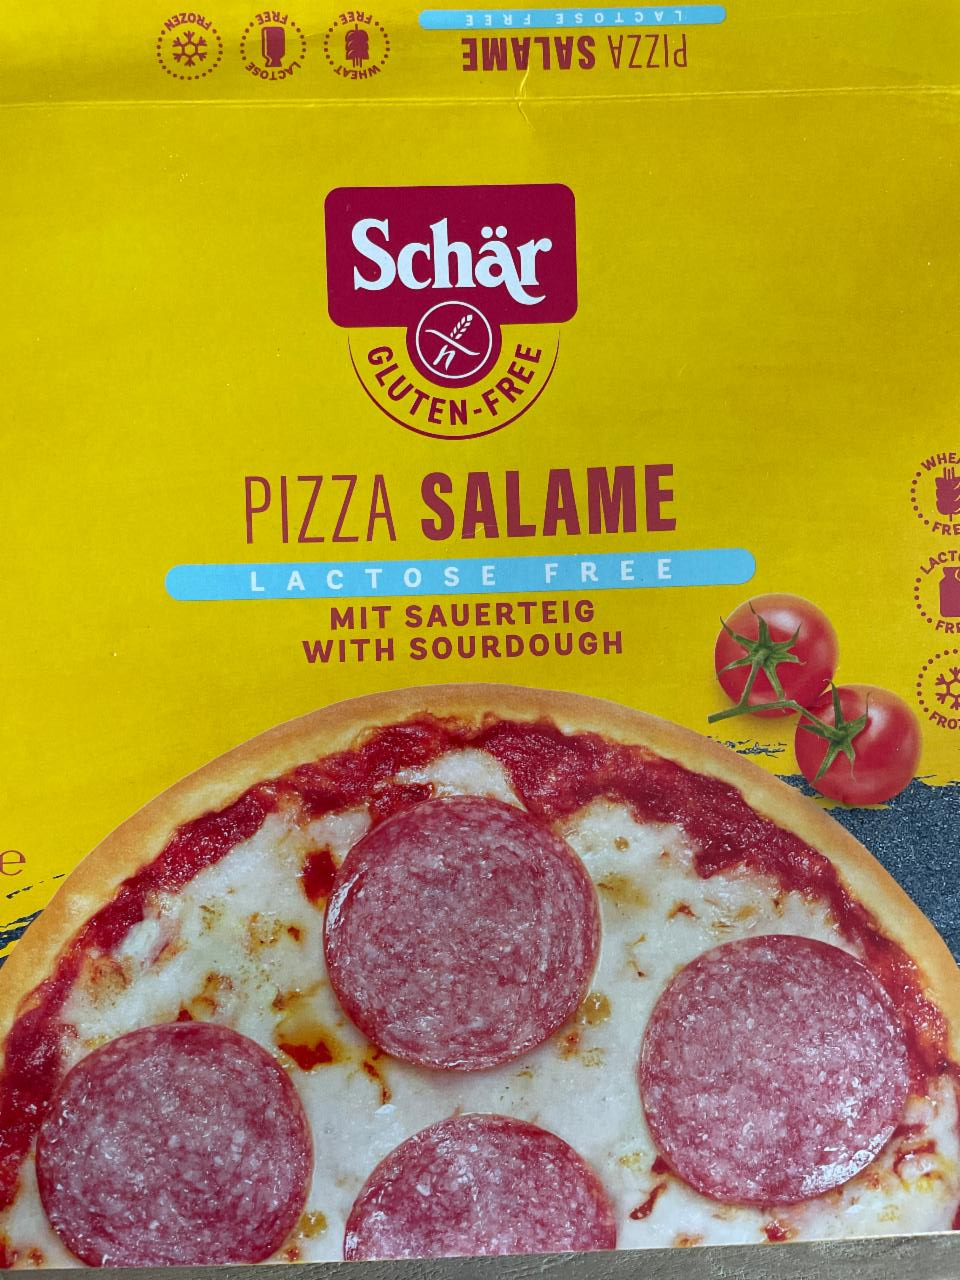 Fotografie - pizza salame SCHÄR